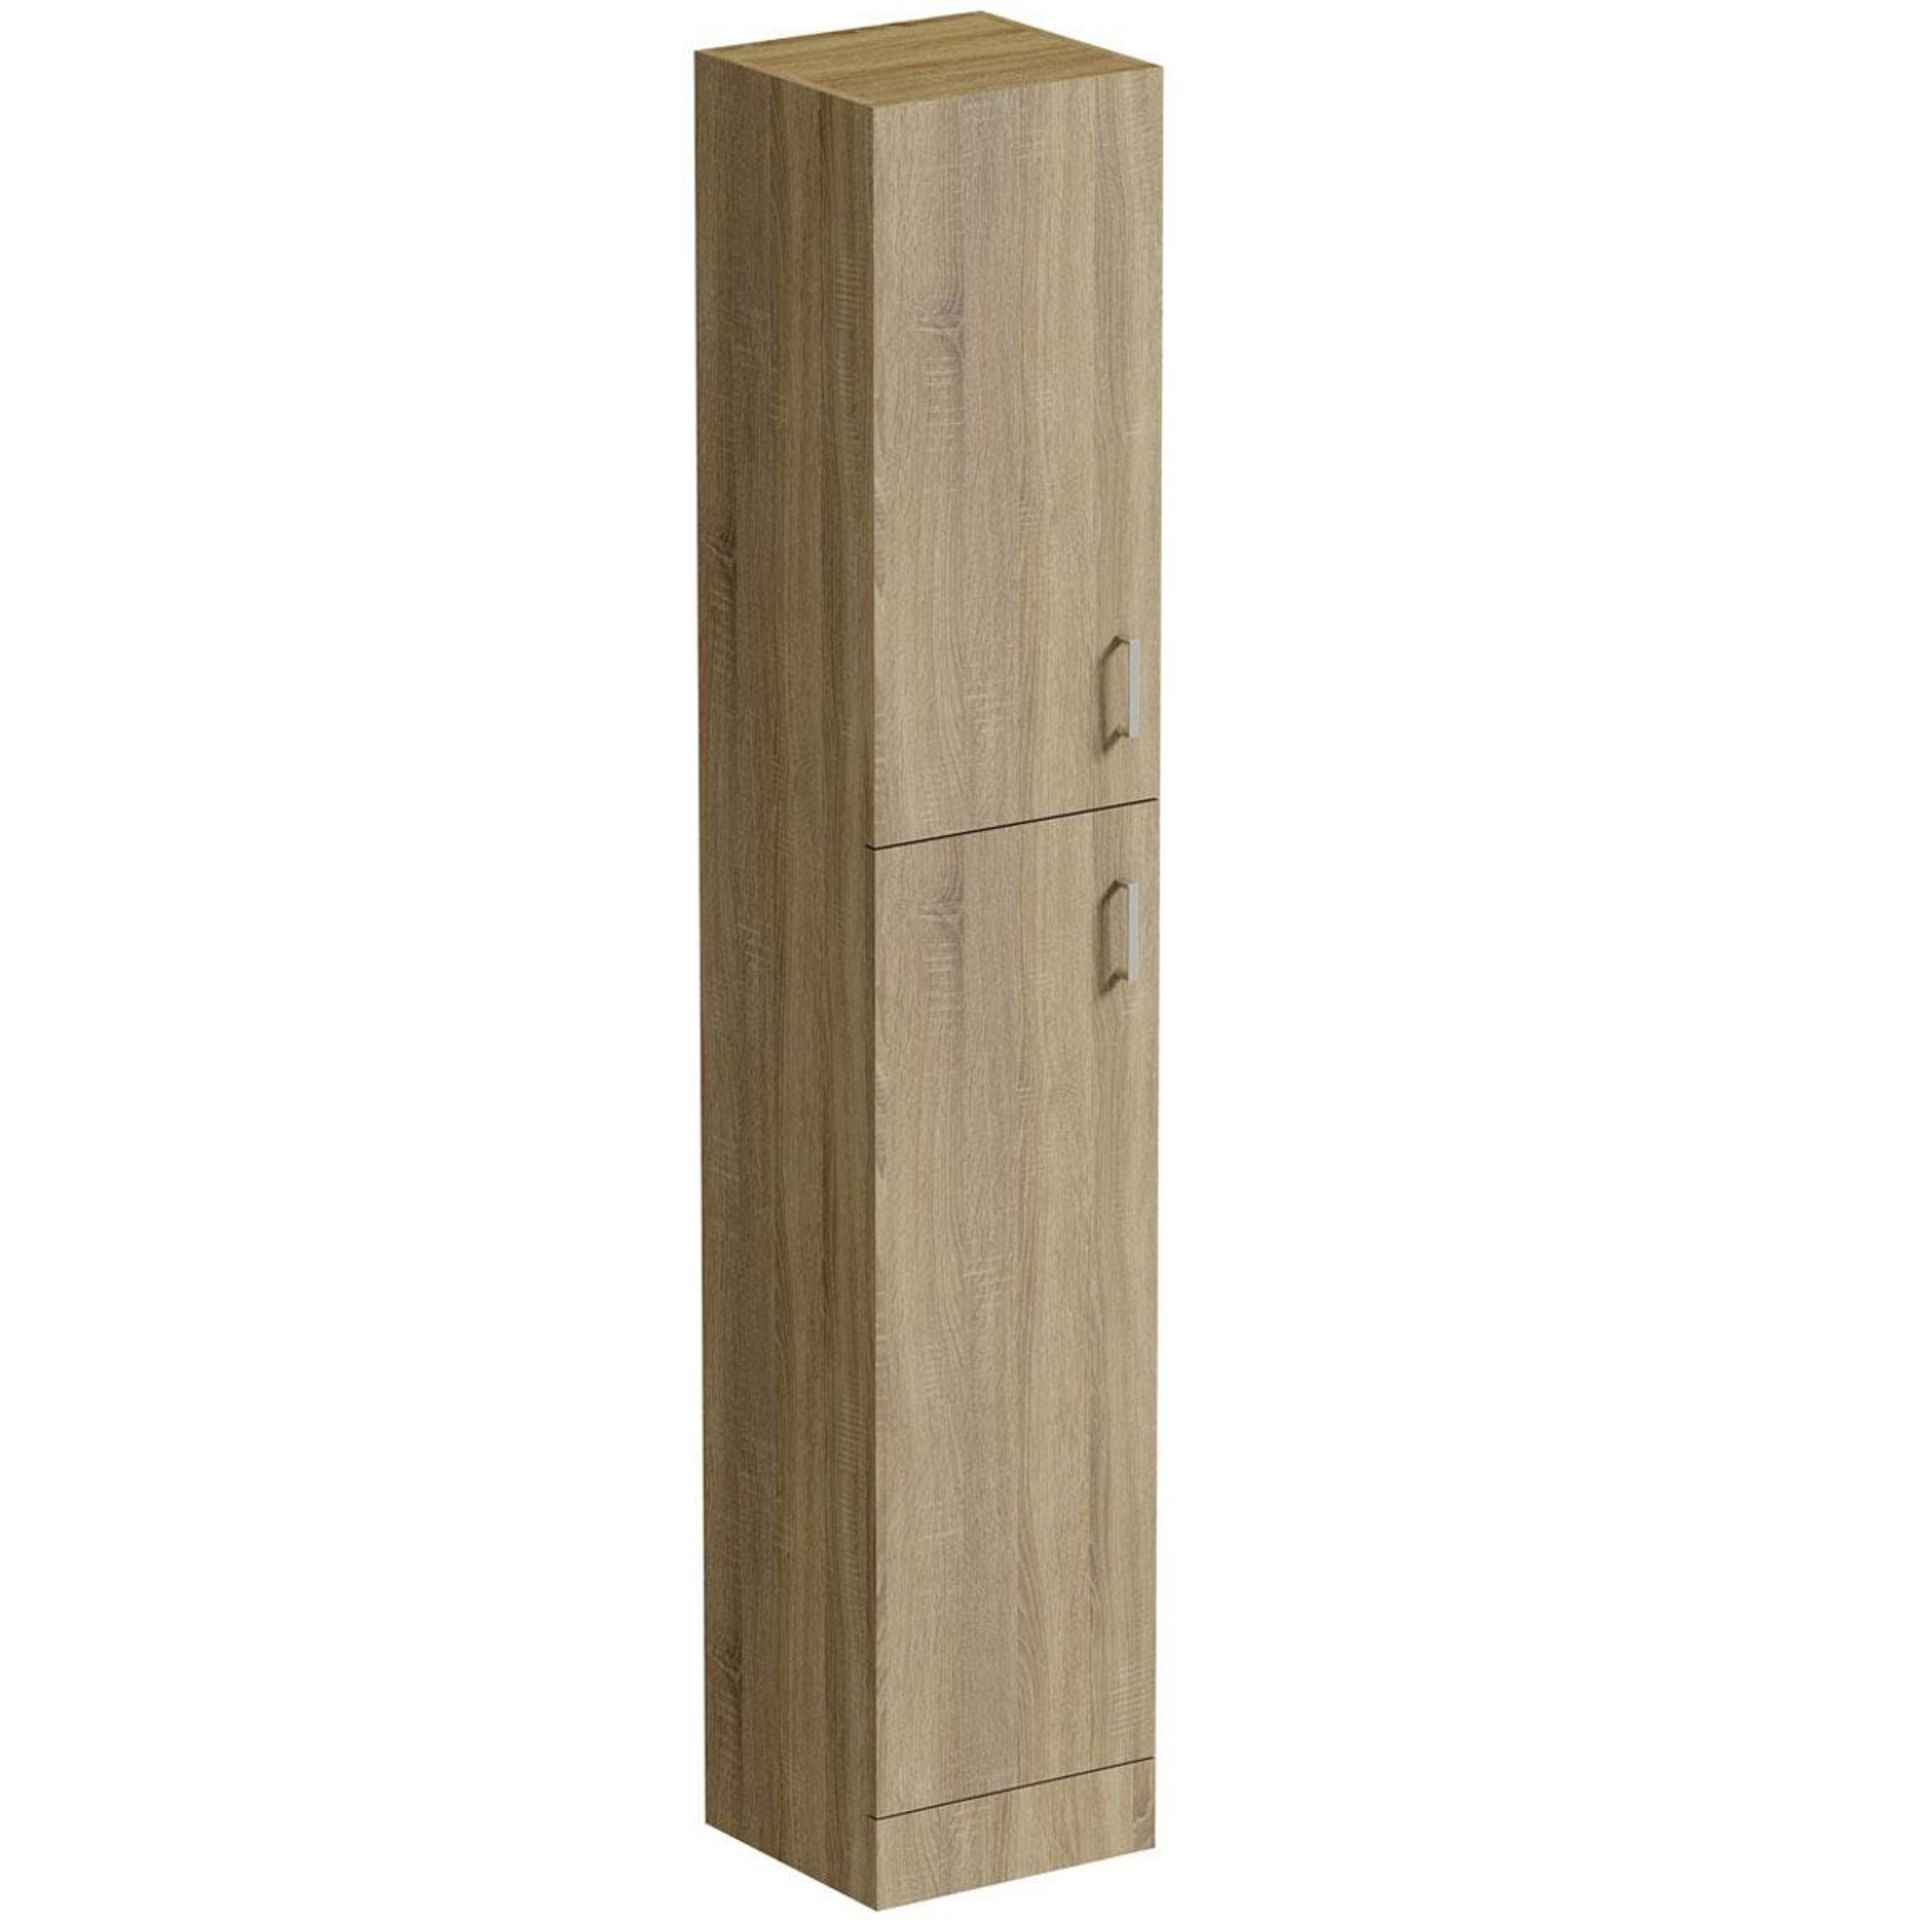 1 x Sienna Oak 300mm Tall Bathroom Storage Unit - Unused Stock - CL190 - Ref BR066 - Location: - Image 4 of 5